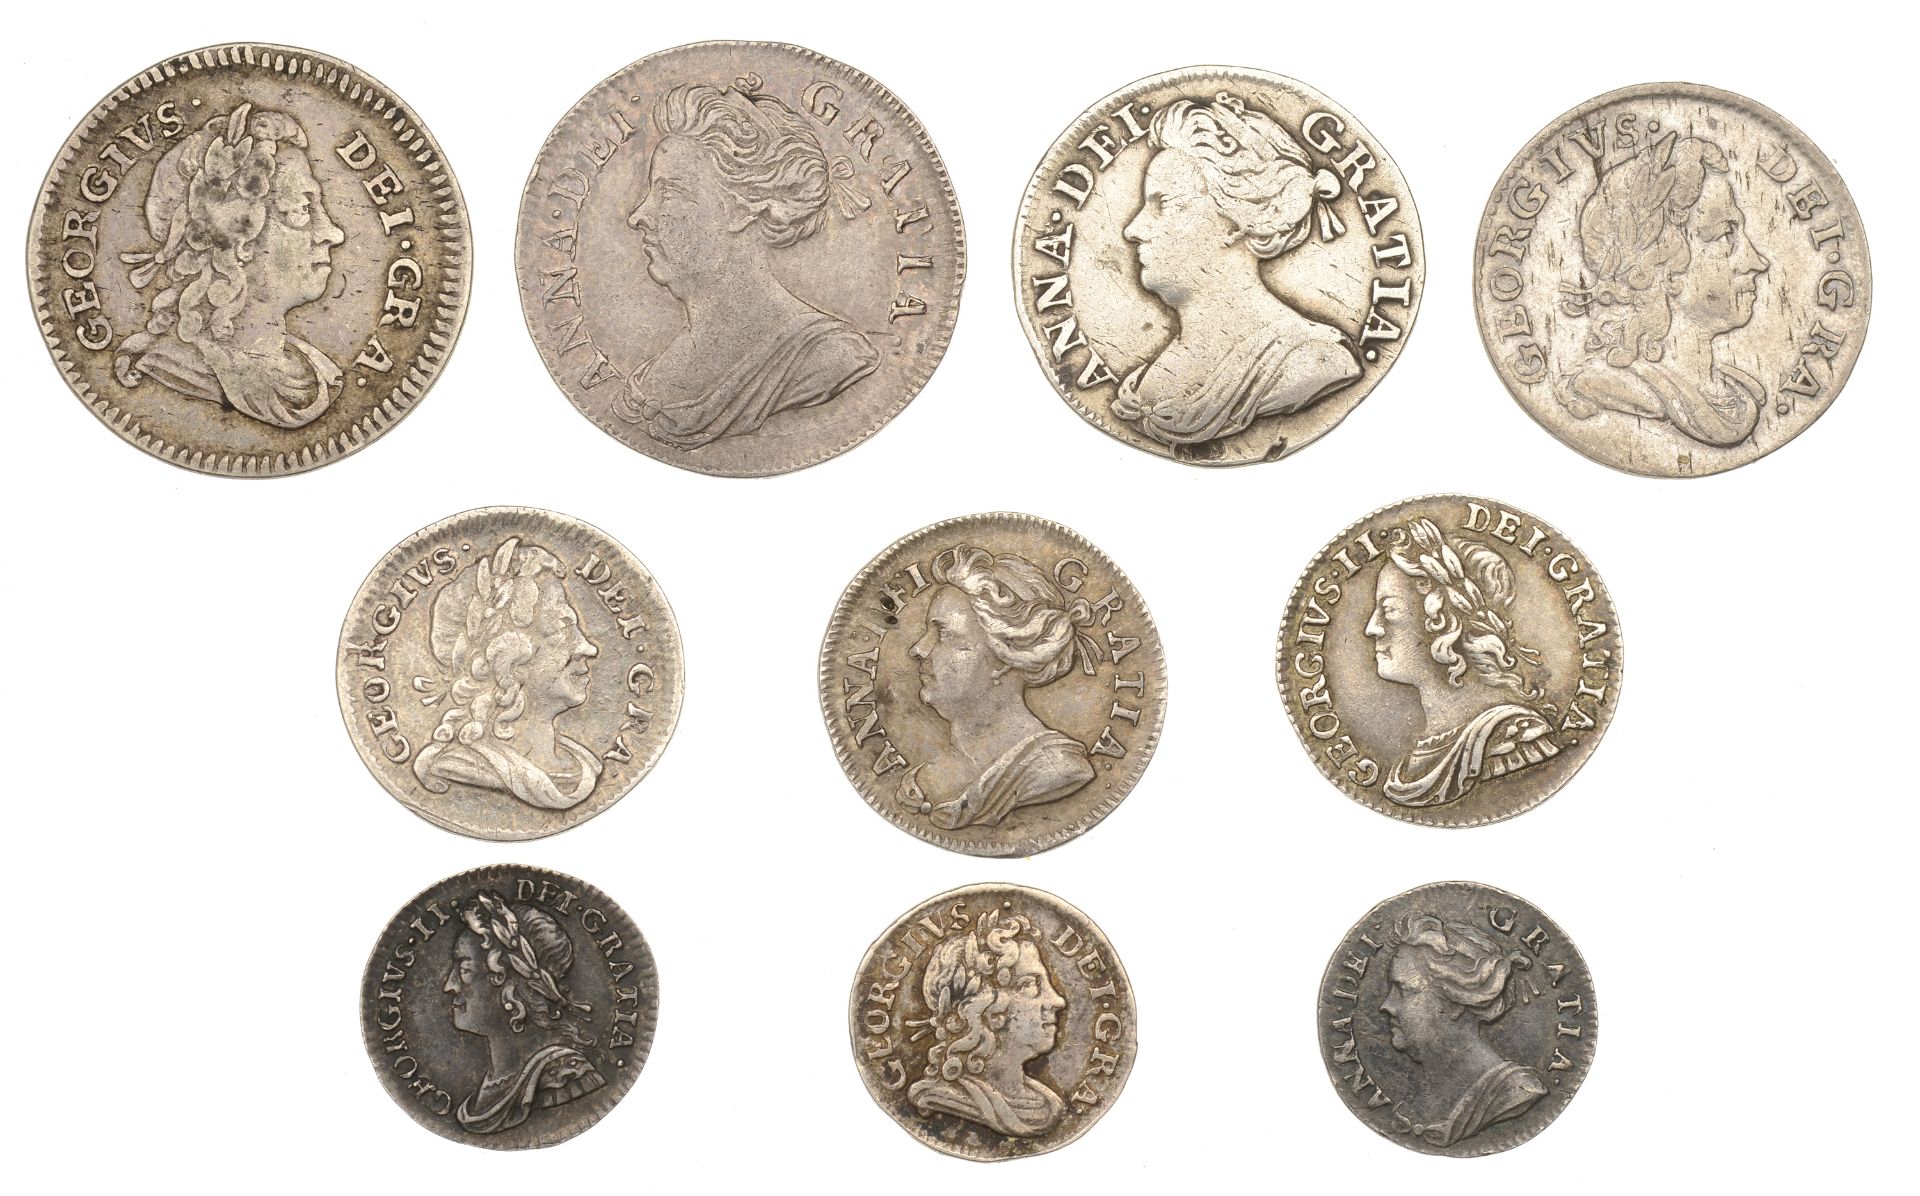 British Coins - Lots